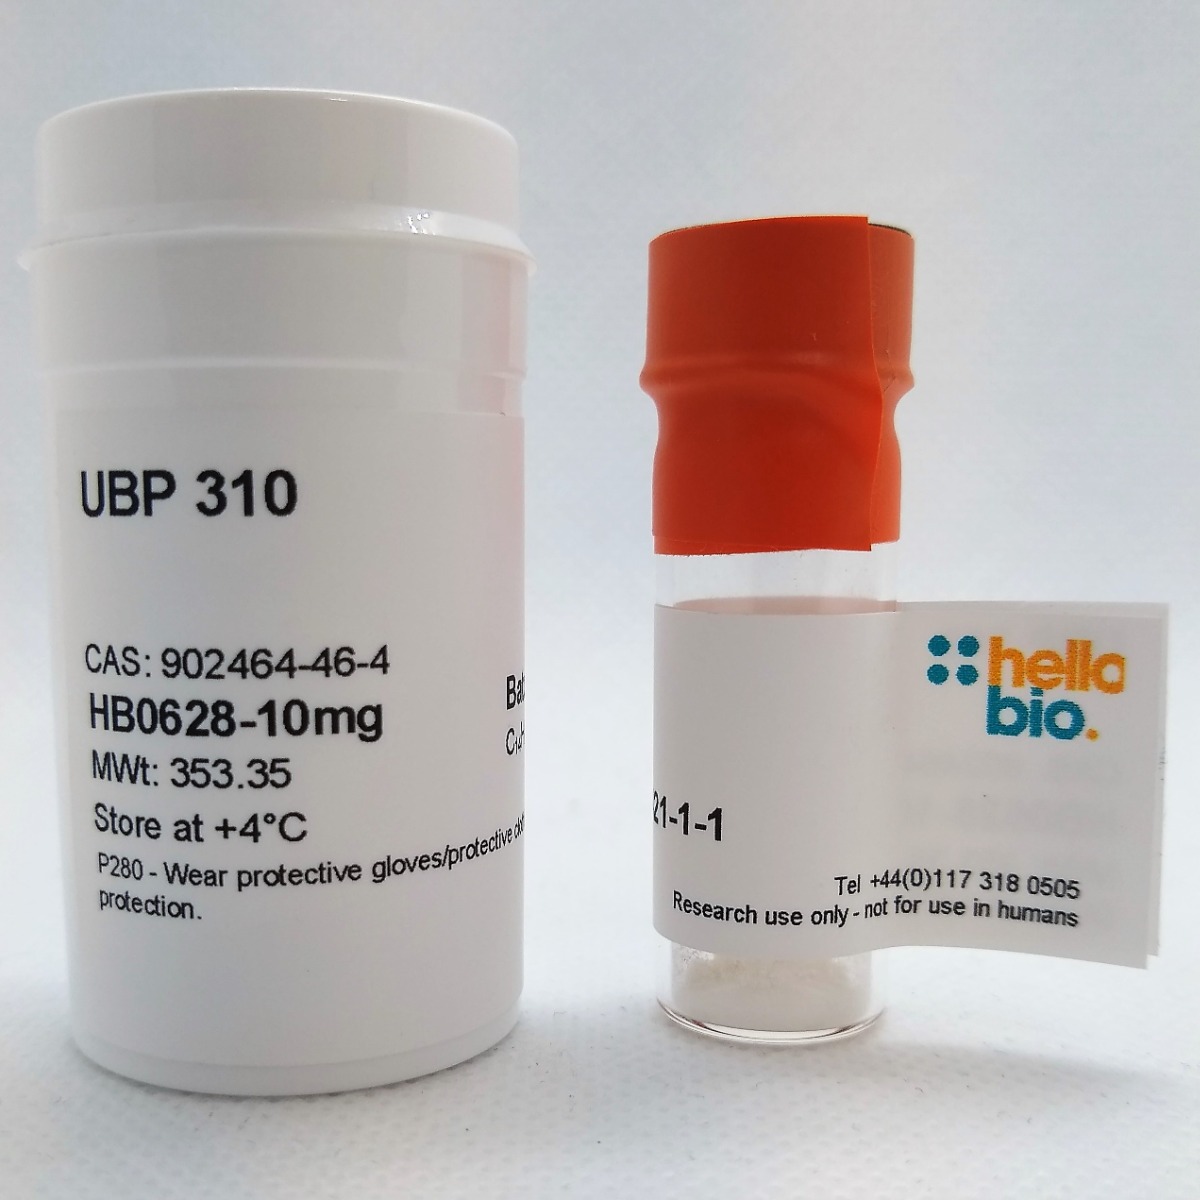 UBP 310 product vial image | Hello Bio